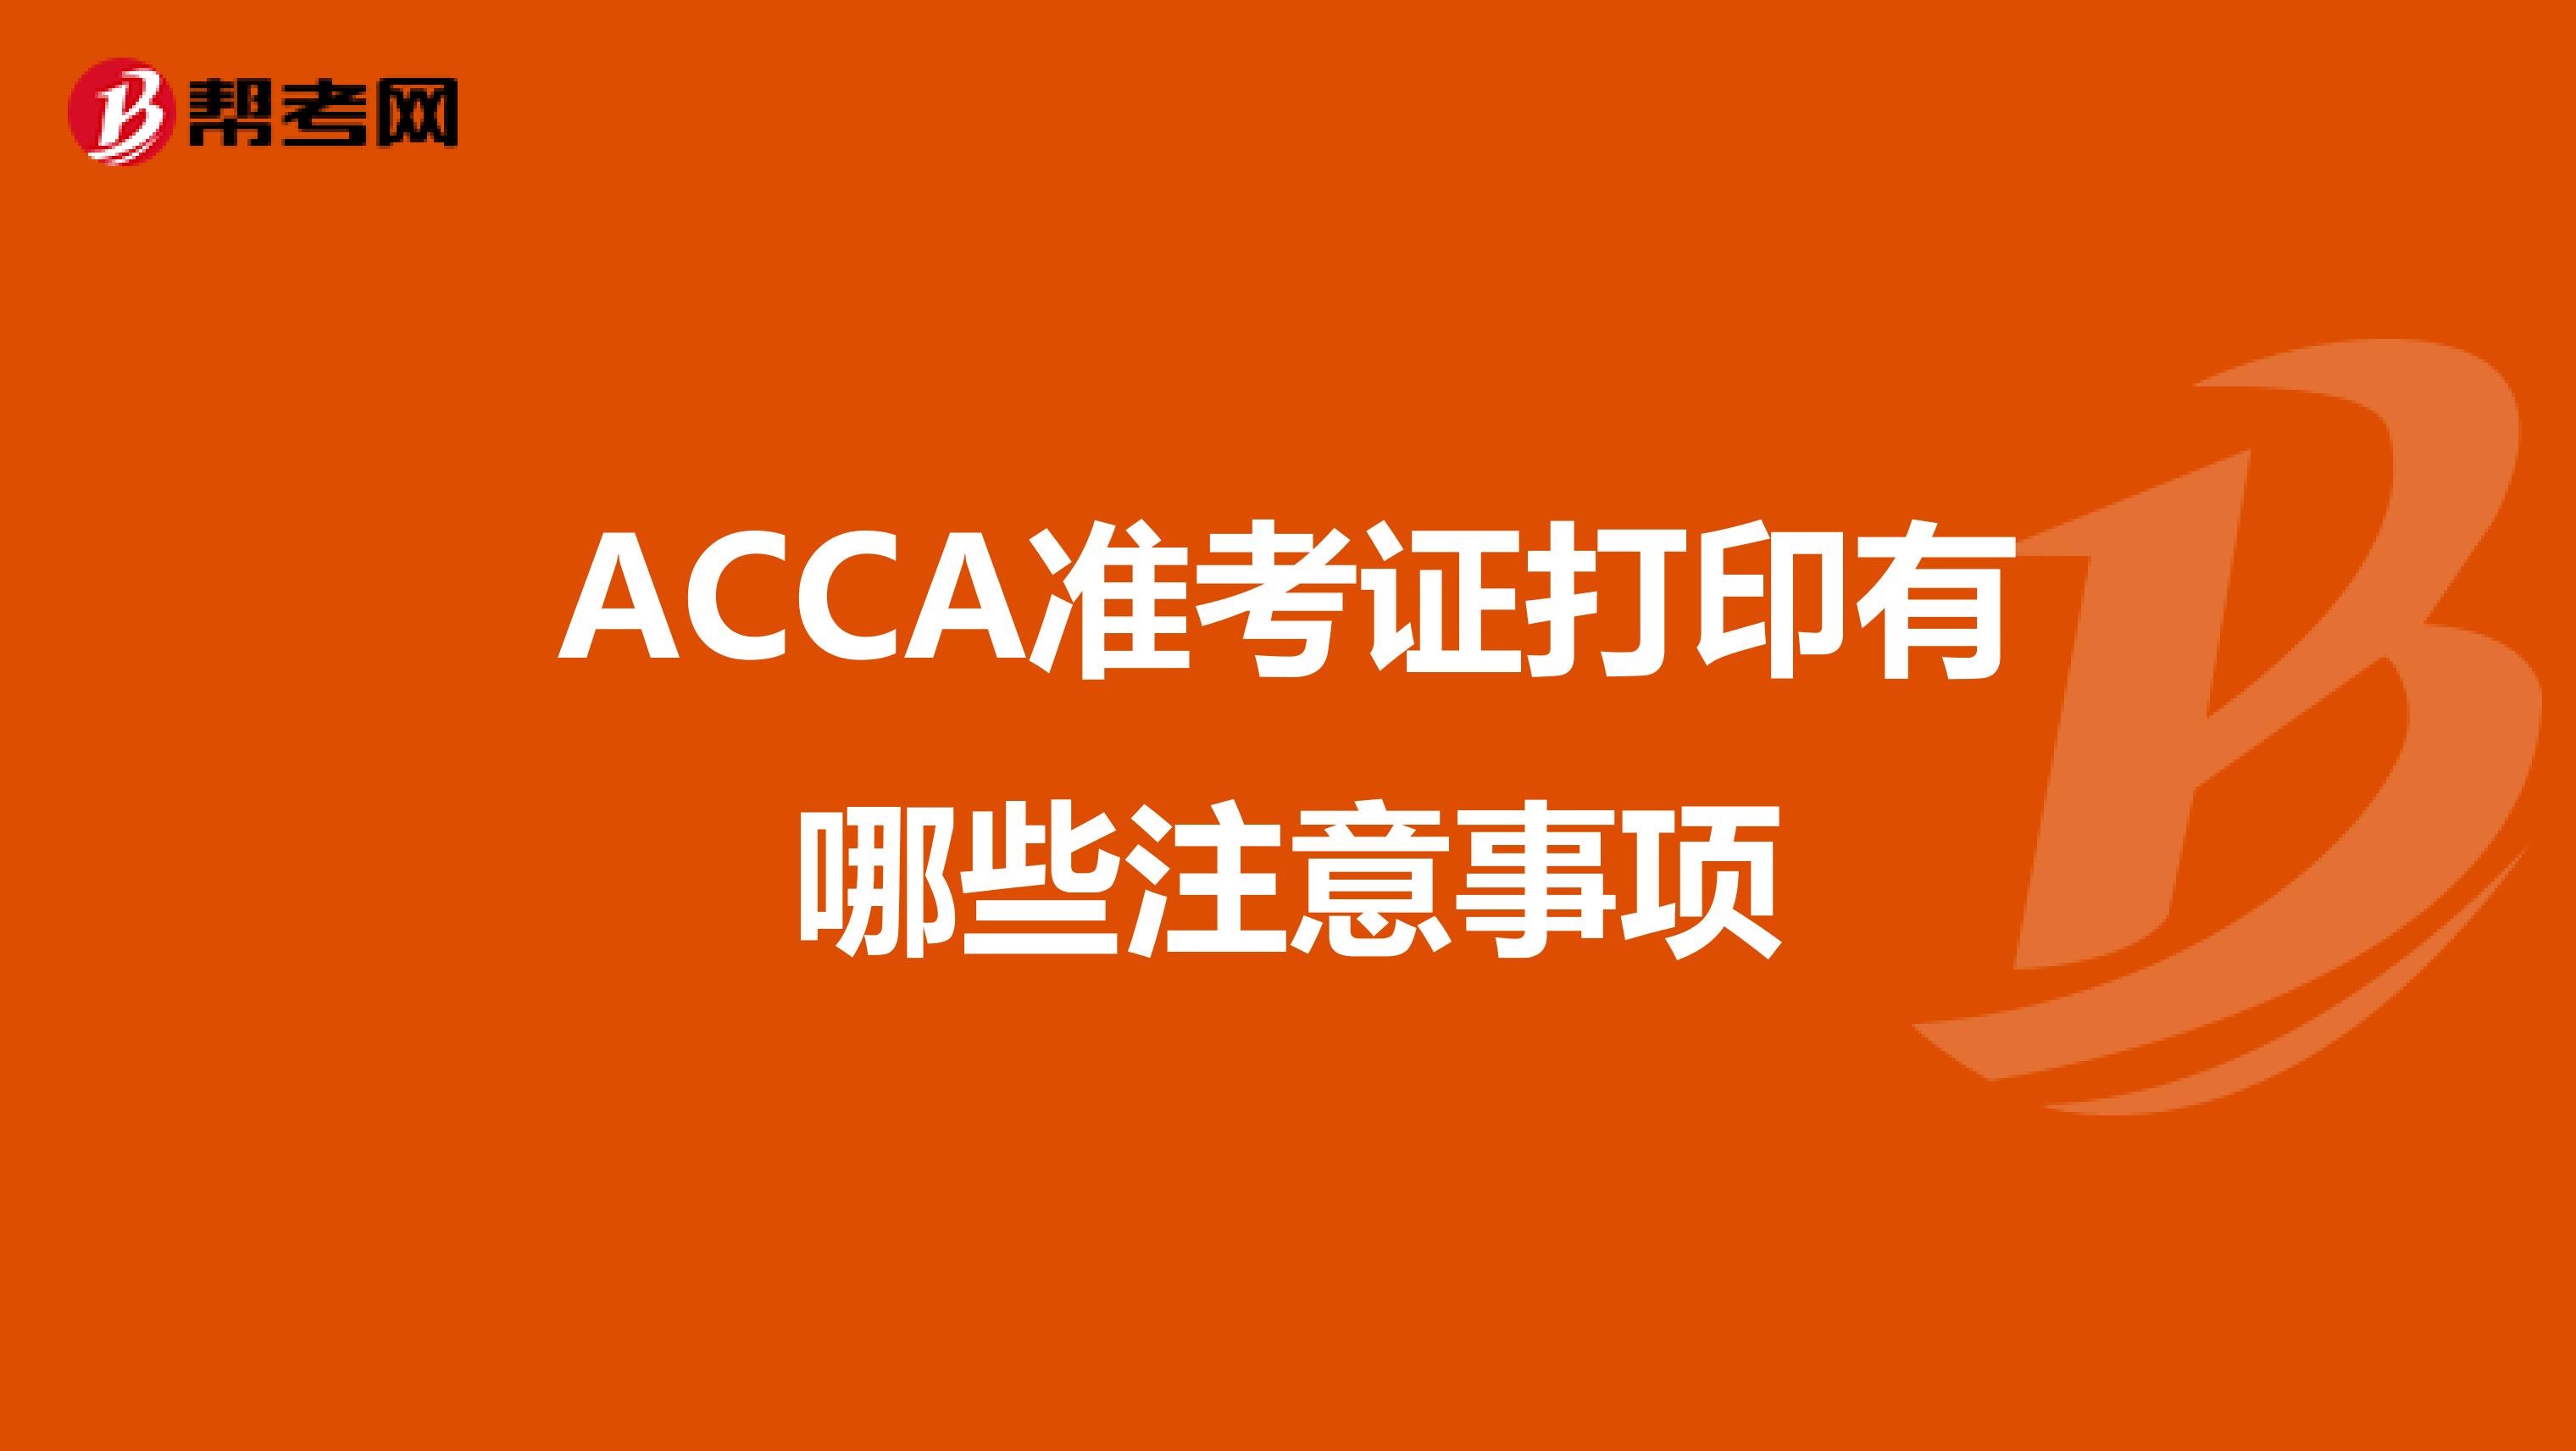 ACCA准考证打印有哪些注意事项